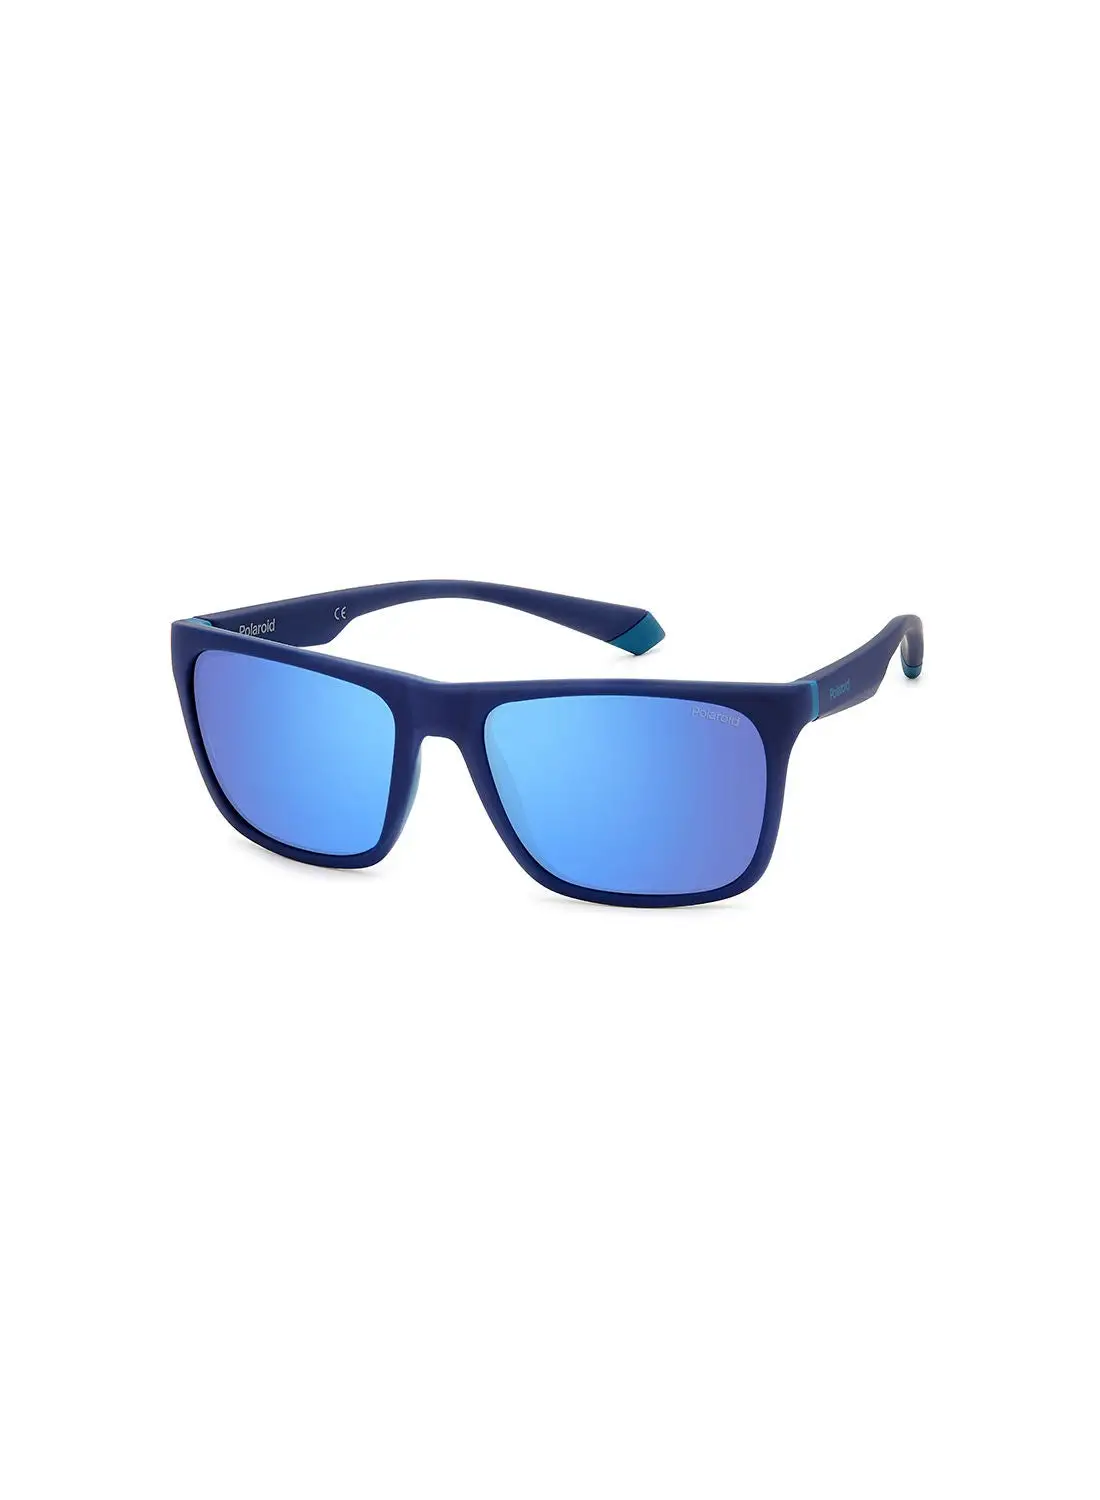 Polaroid Unisex UV Protection Square Sunglasses - Pld 2141/S Mtblu Azu 57 - Lens Size: 57 Mm